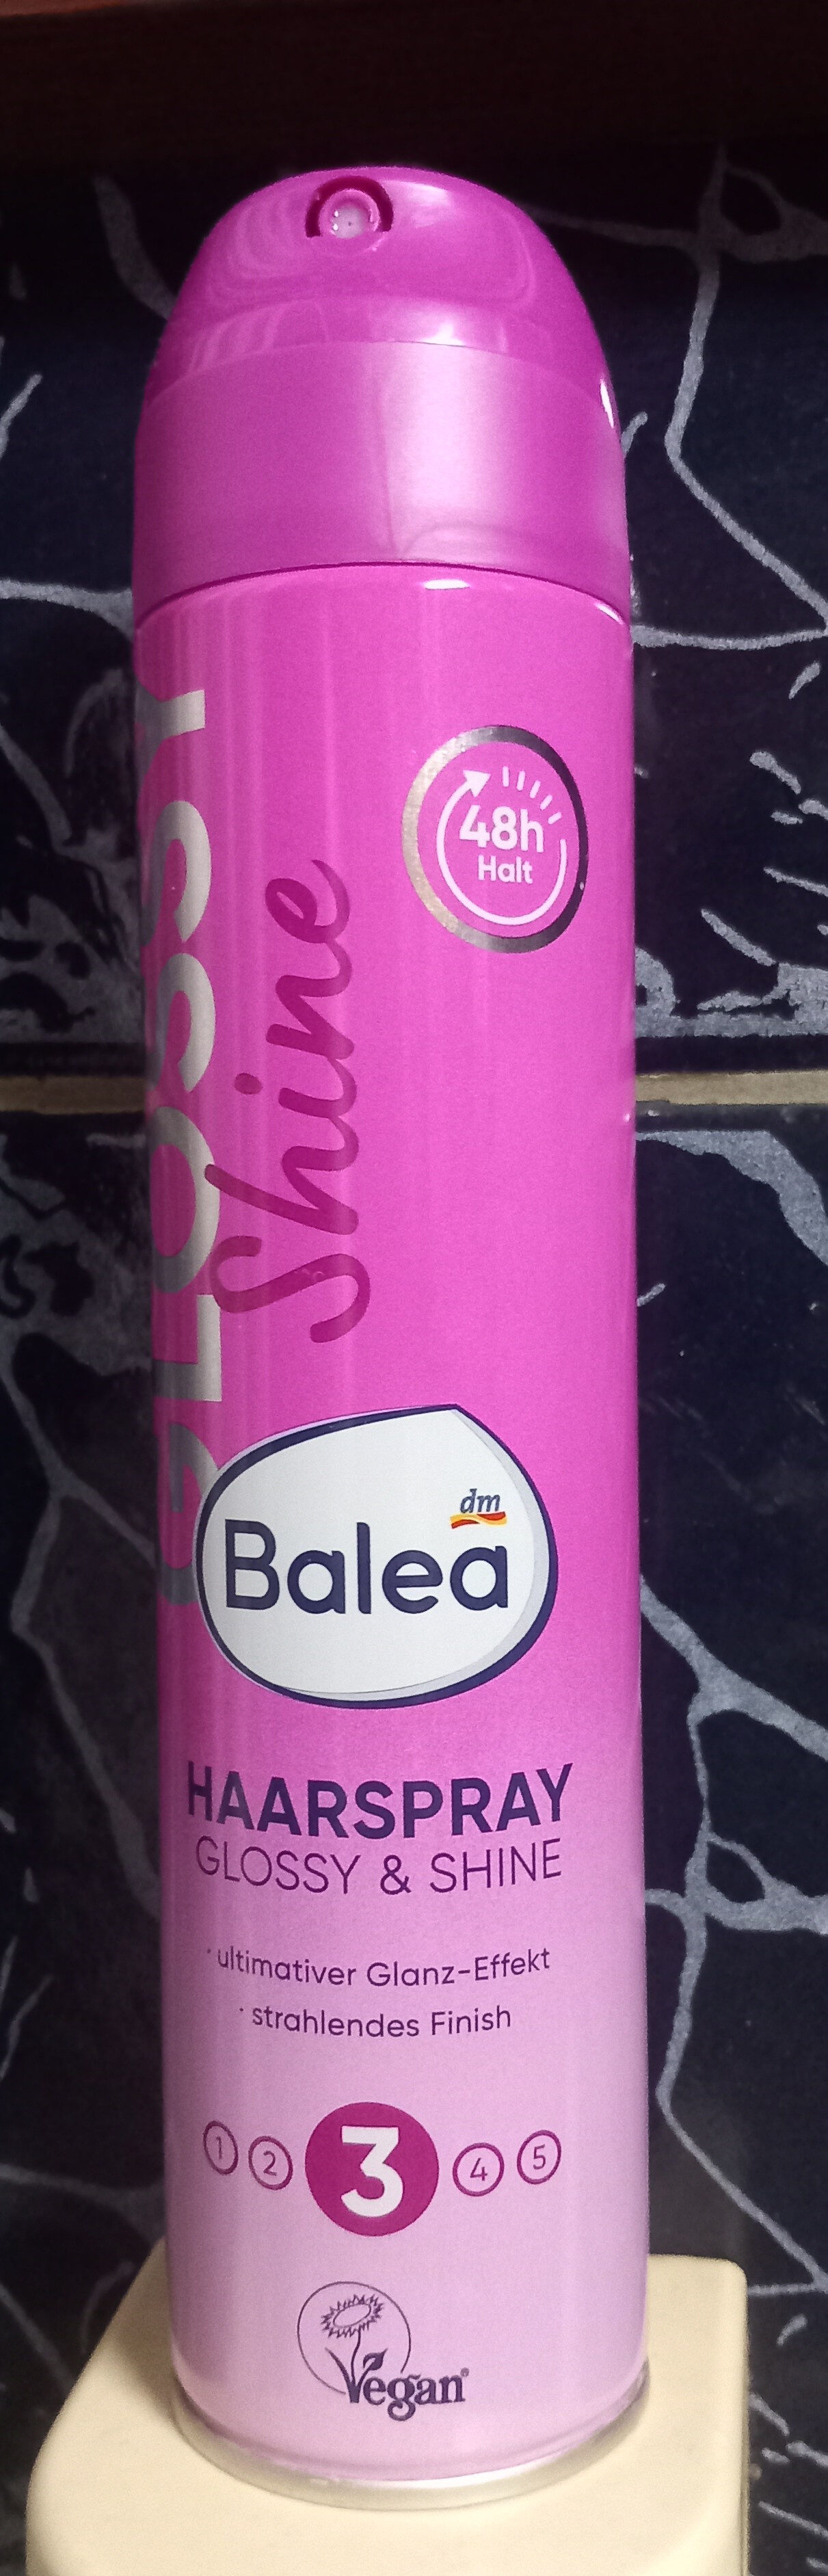 Balea Hairspray Gloss & Shine - Product - mk